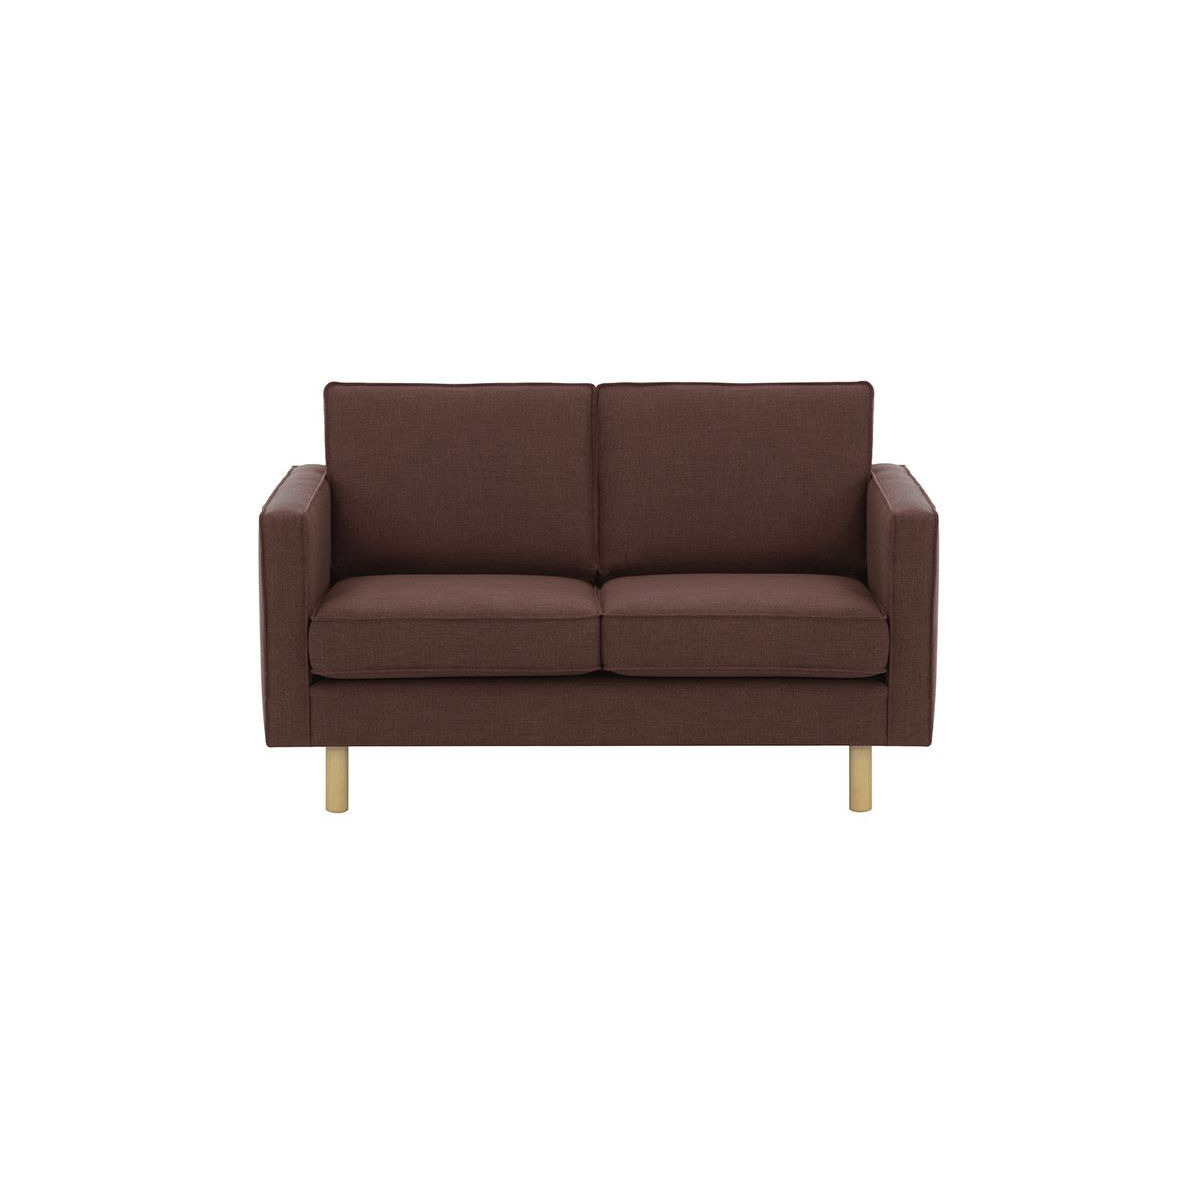 Coco 2 Seater Sofa, burgundy - image 1